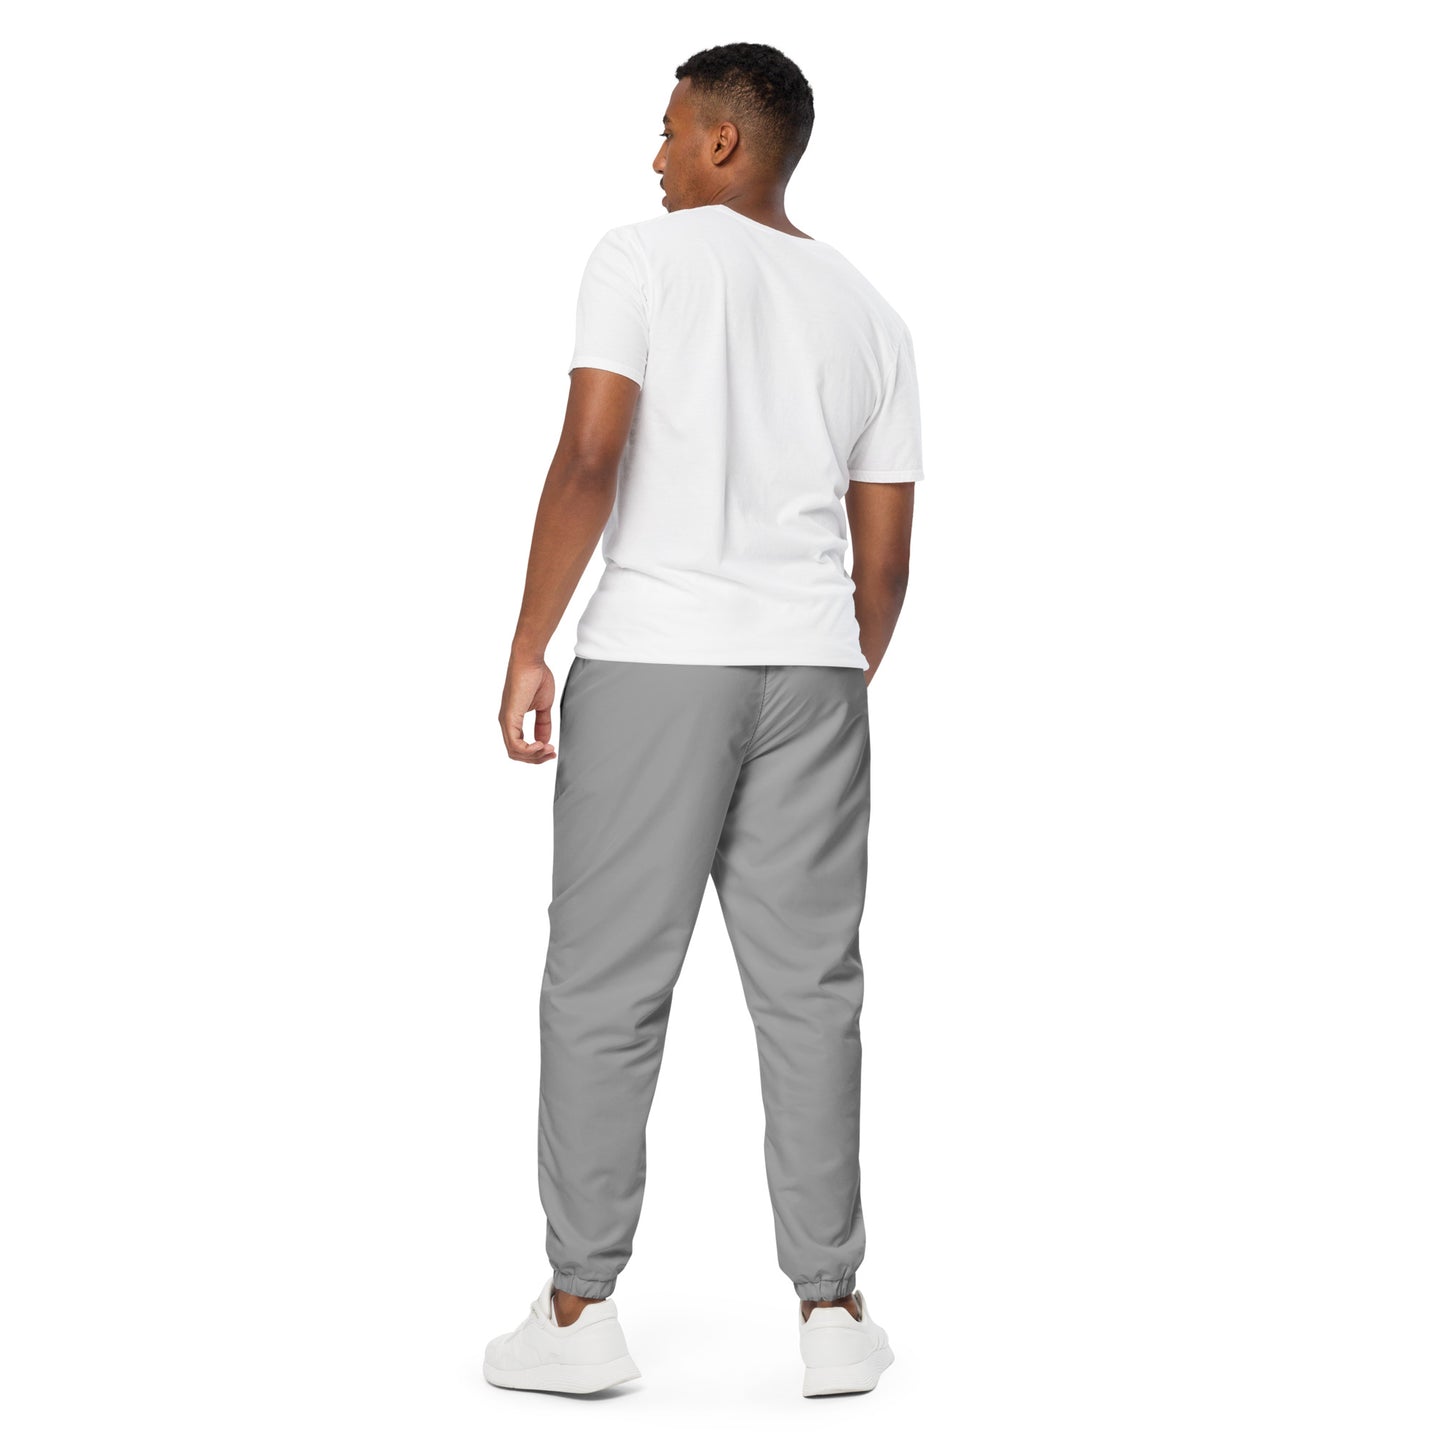 CS0038 - 01010 - Steep & Deep Unisex track pants (Matching Gray)